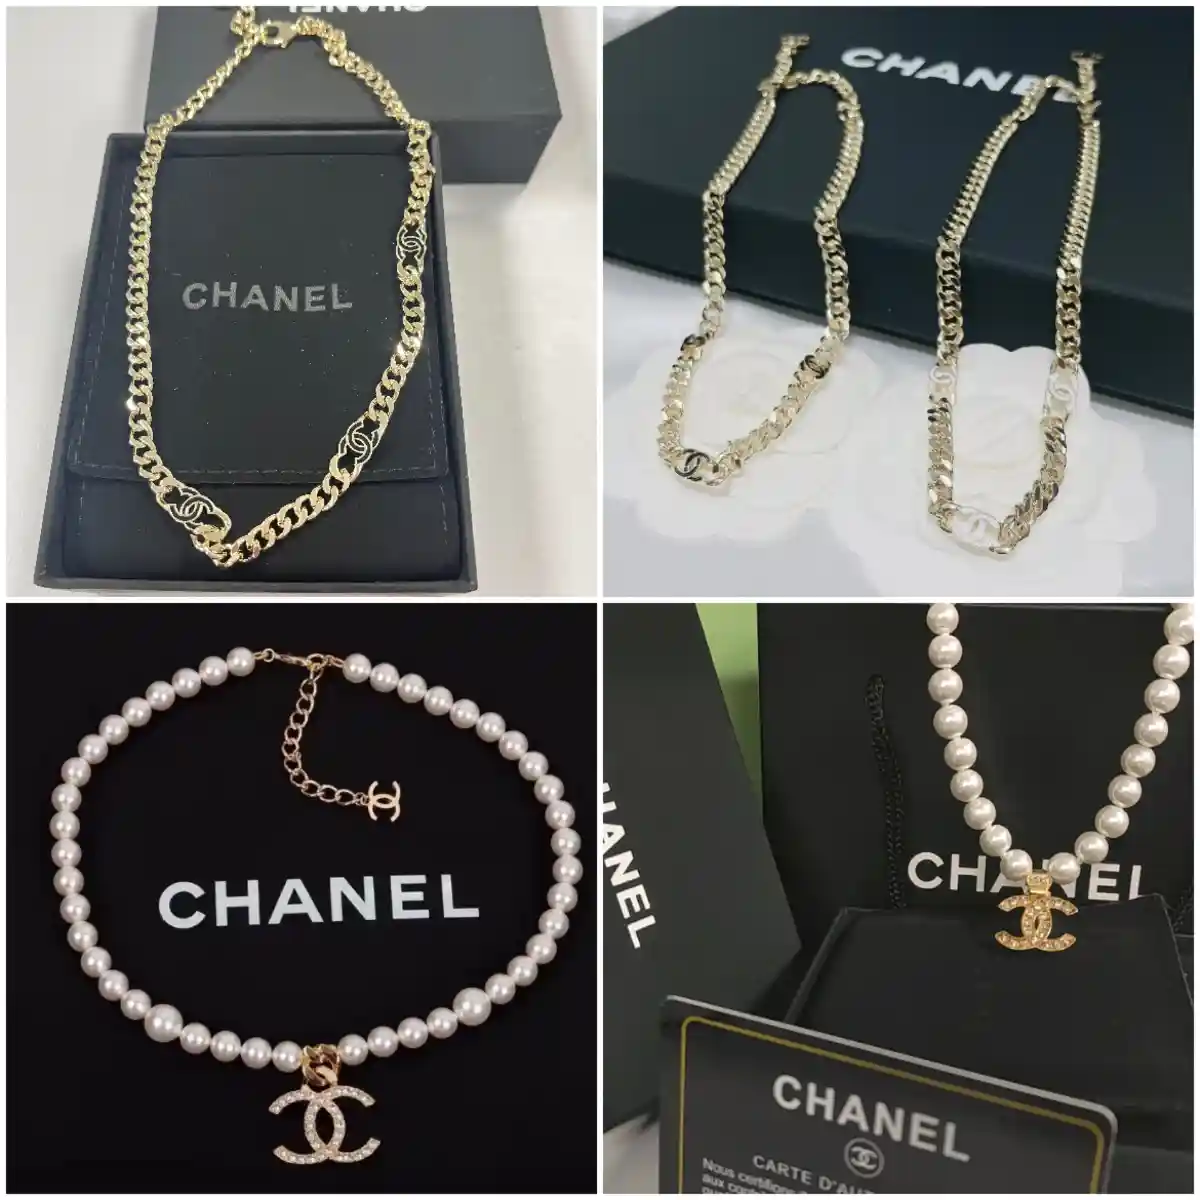 Chanel cc necklace dupe dhgate